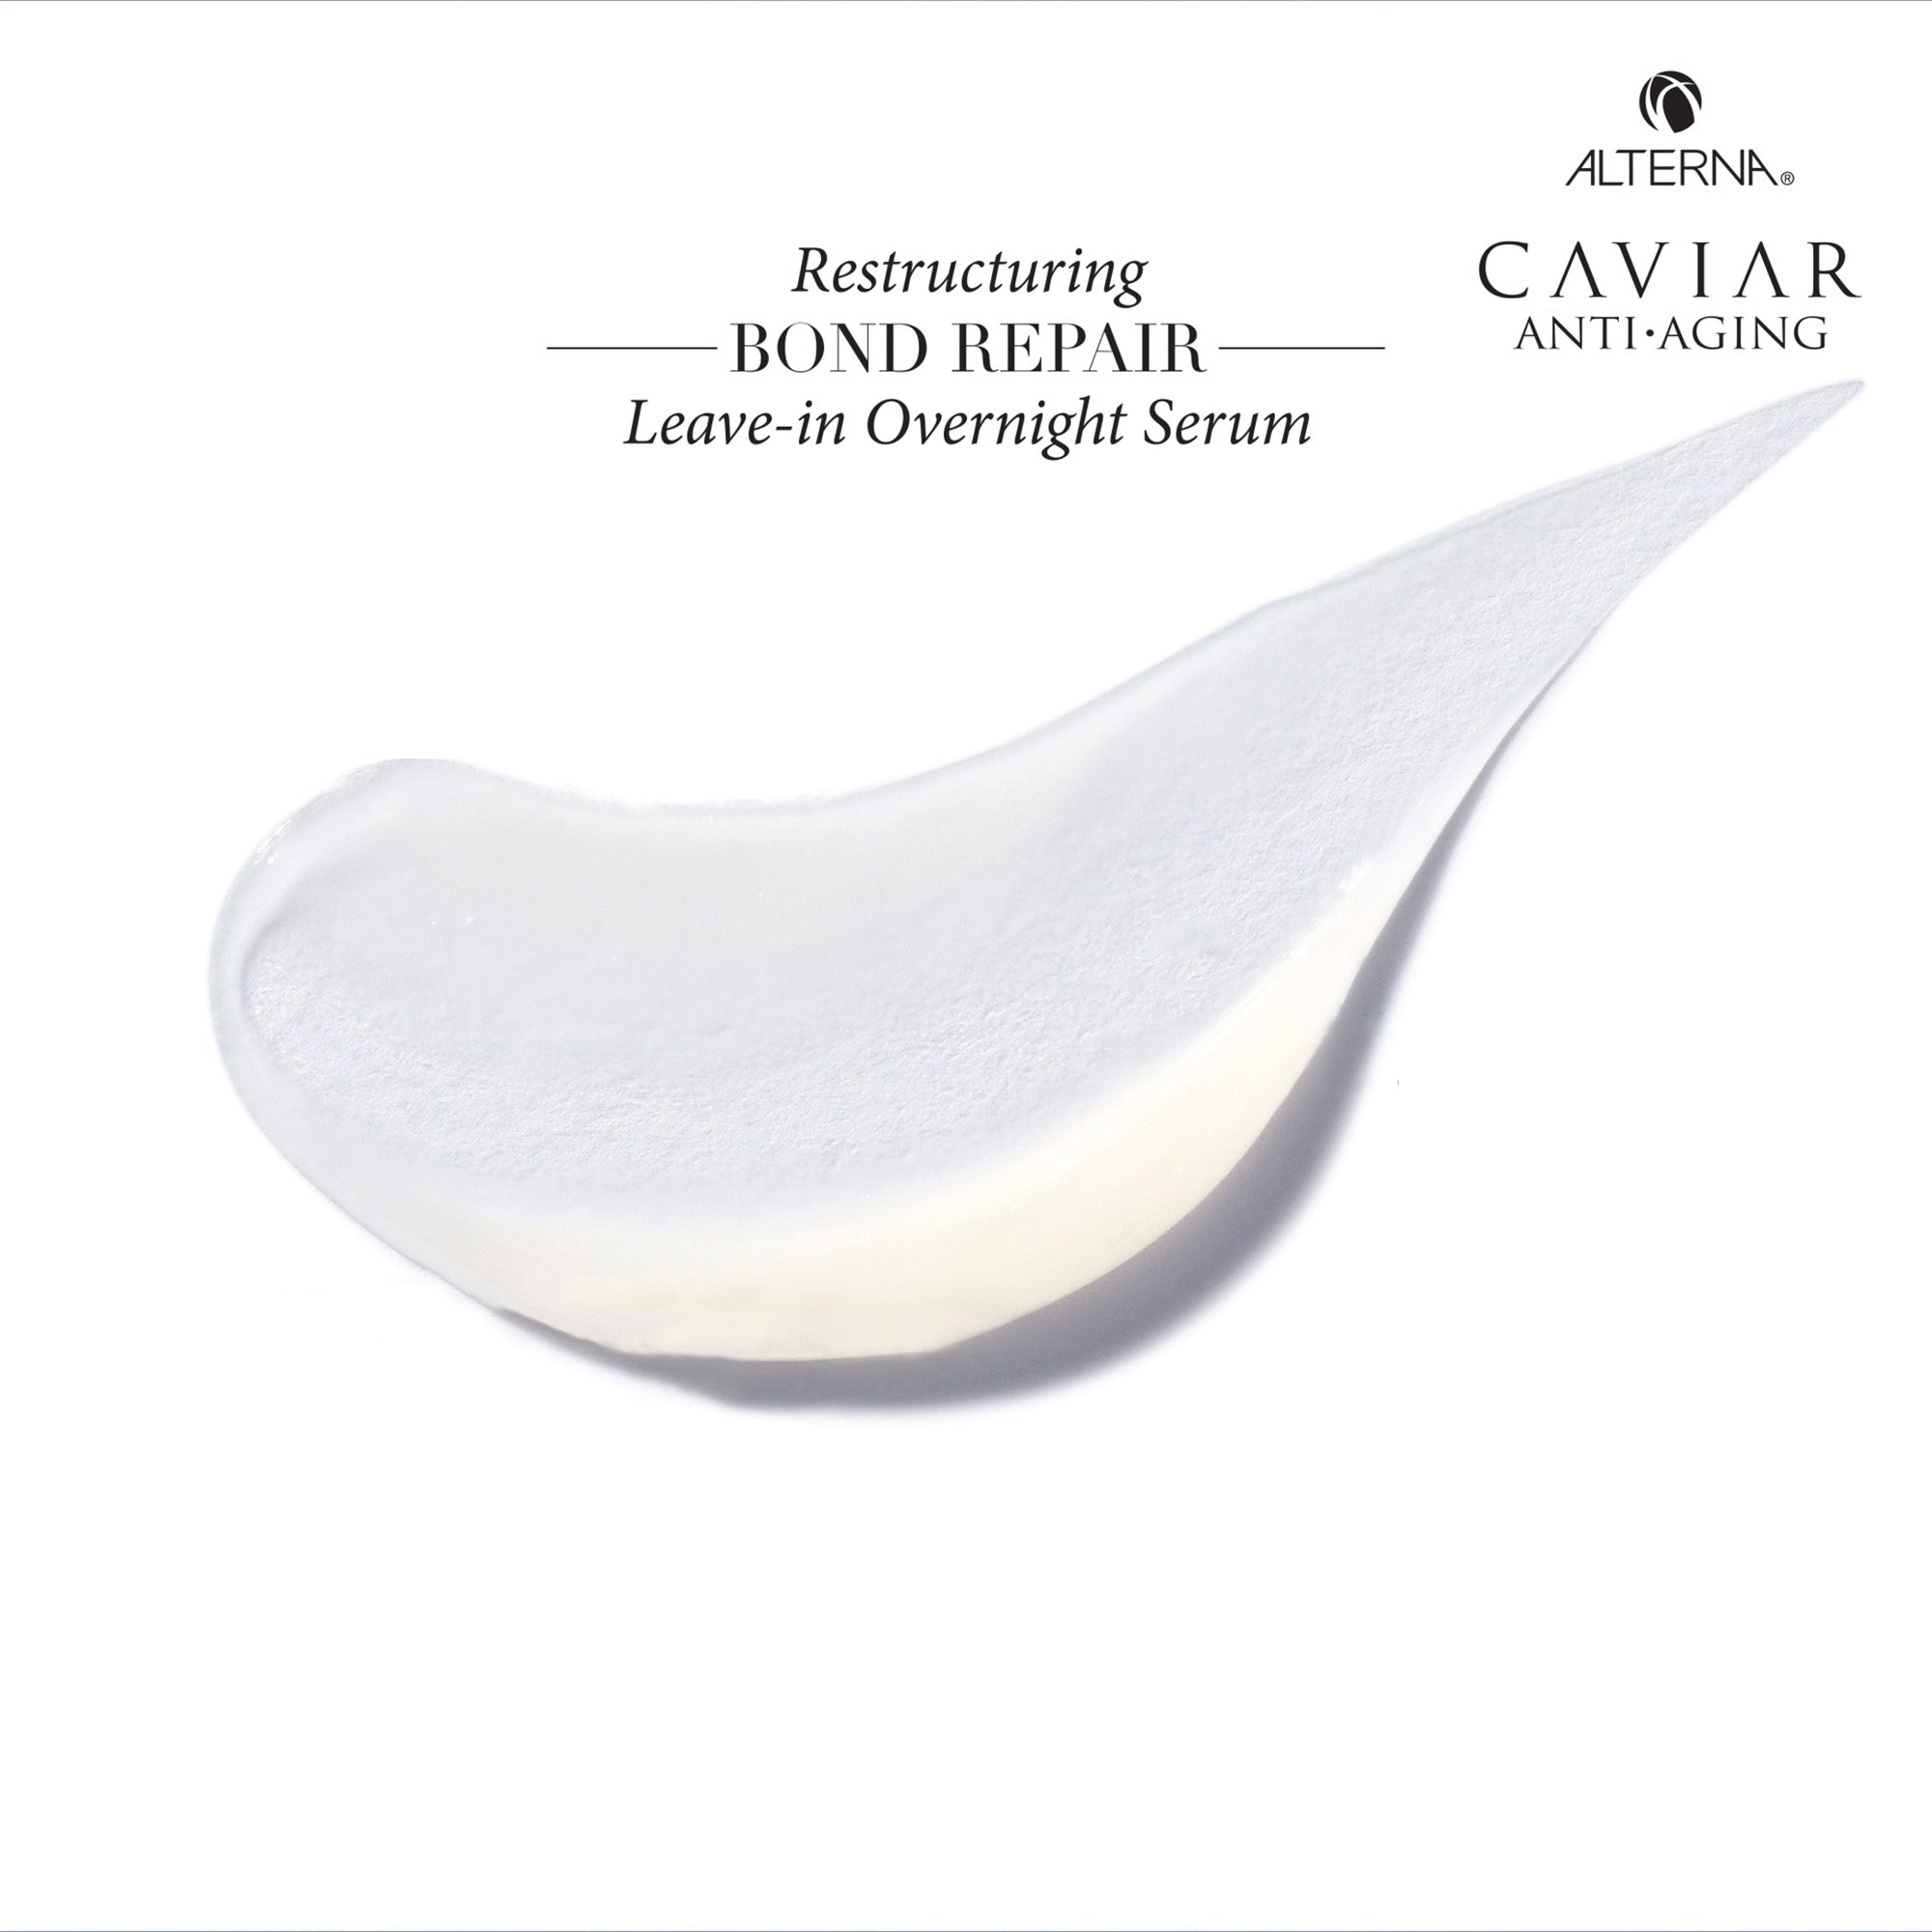 Alterna Caviar Anti-Aging Restructuring Bond Repair Leave-In Overnight Serum / 3.4OZ